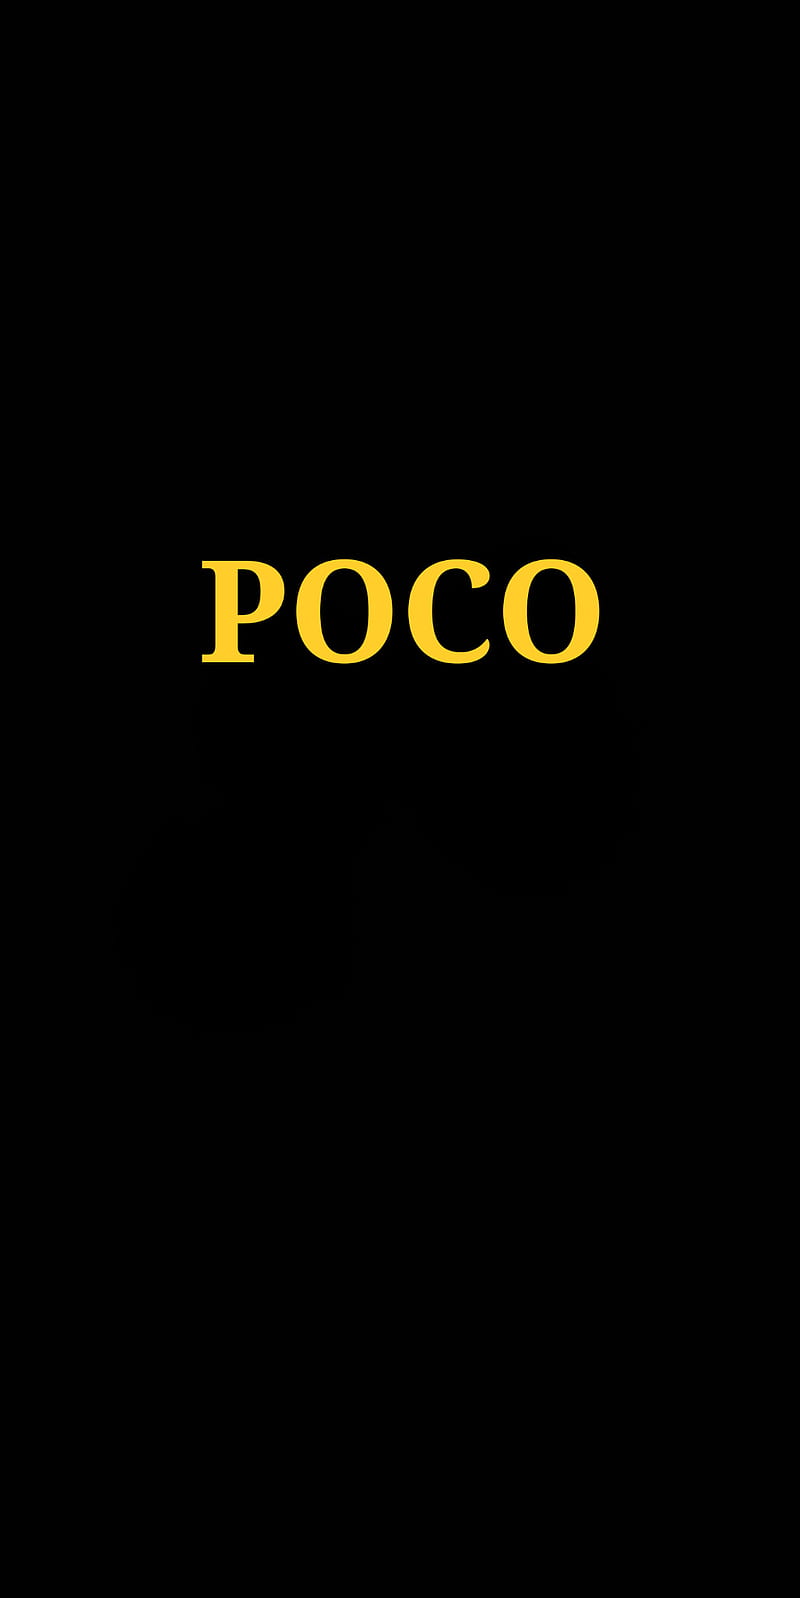 Poco | Spanish Restaurants